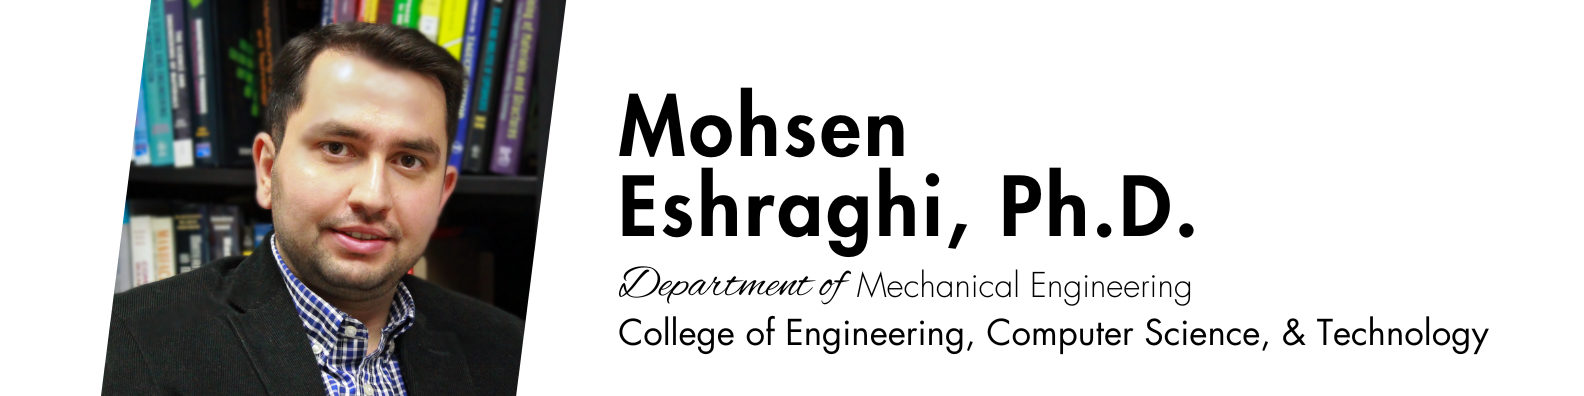 Mohsen Eshraghi banner rev